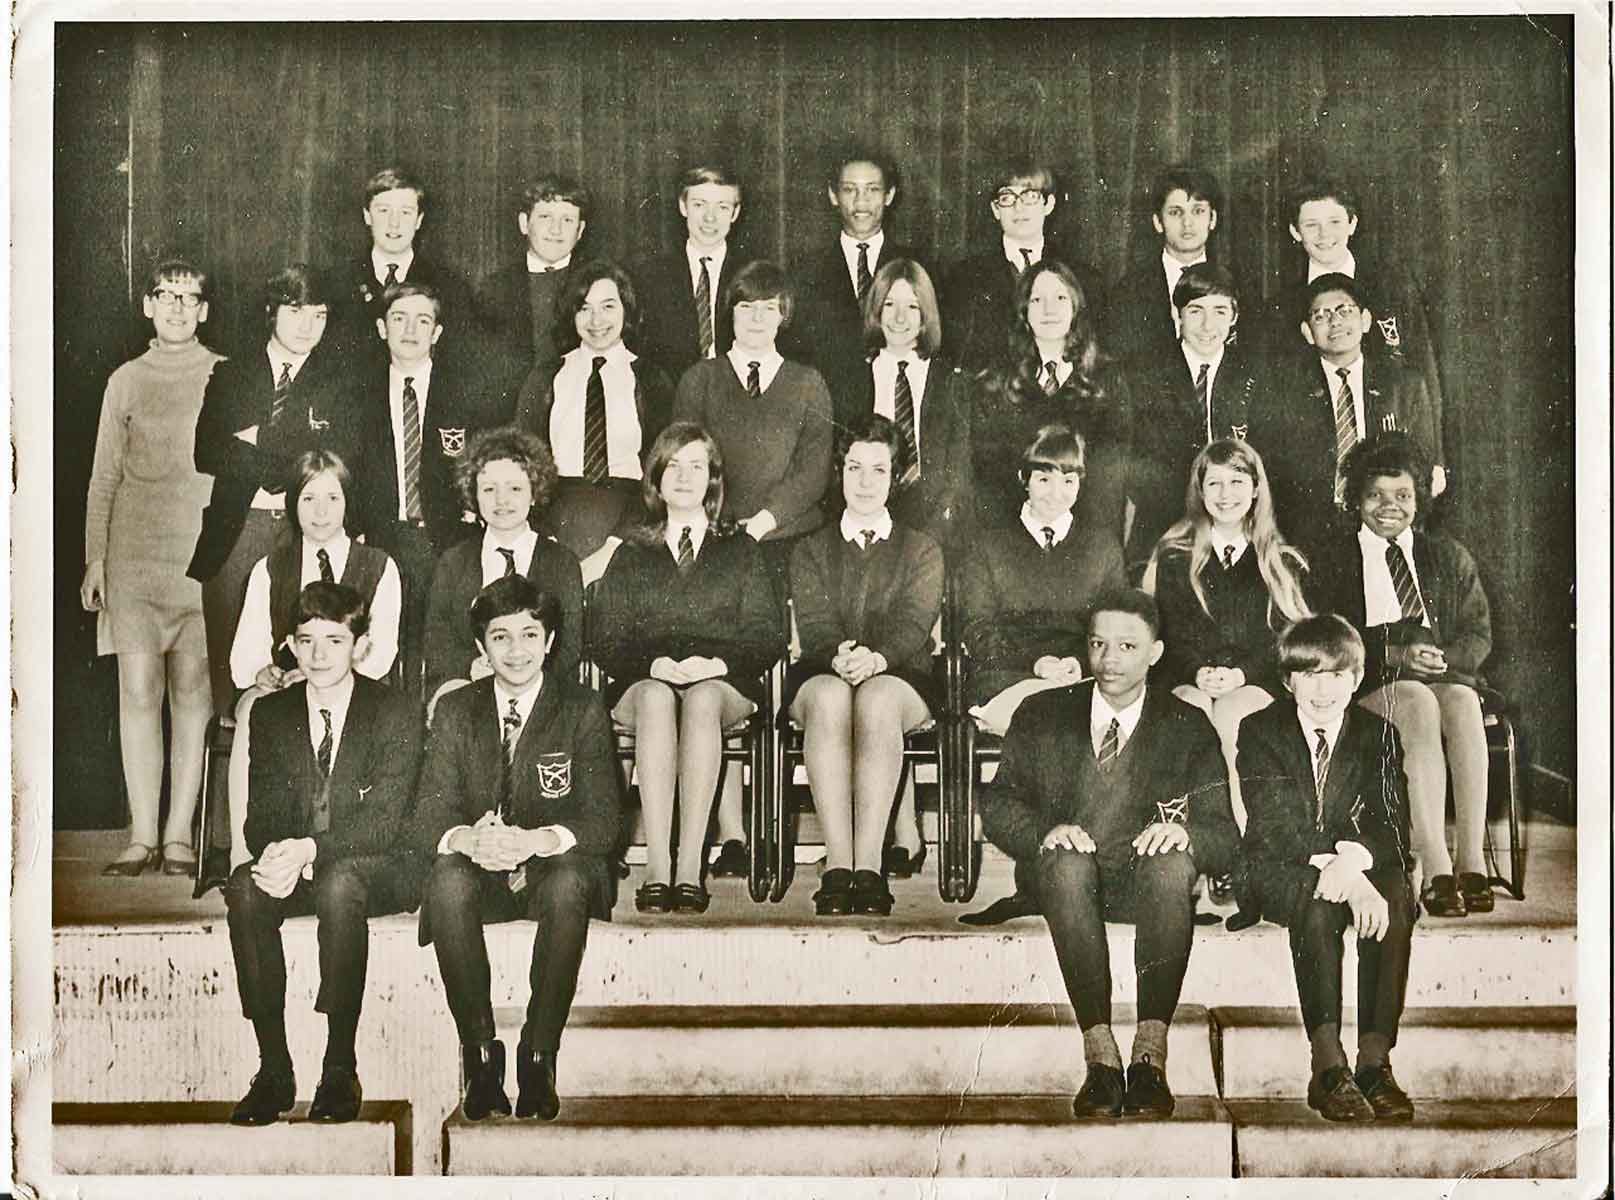 William Morris School - 1968, Walthamstow